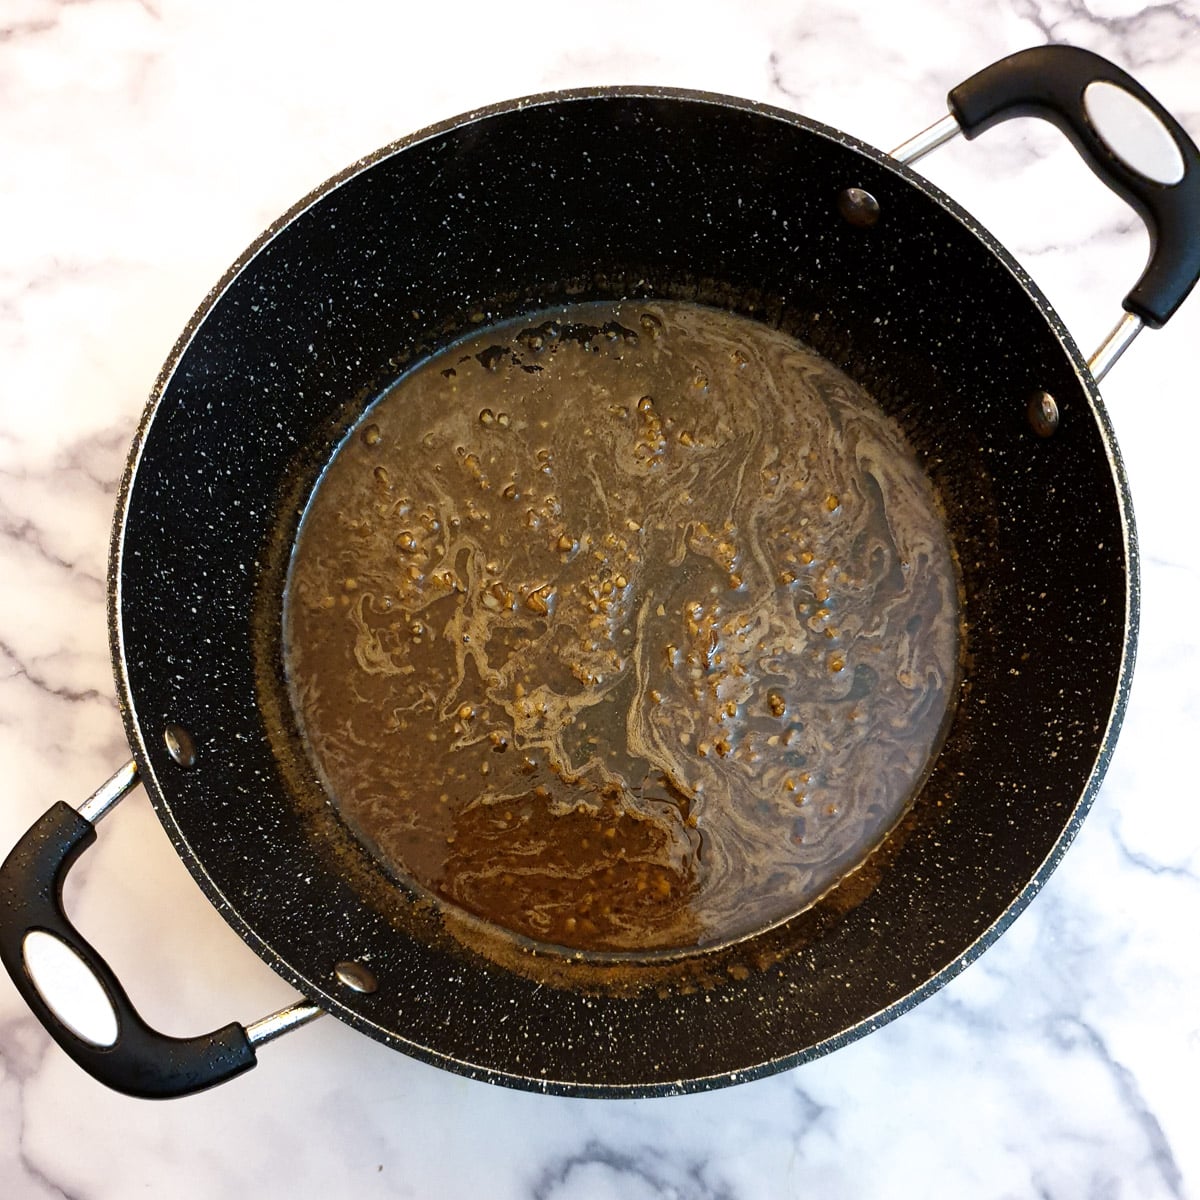 Buttery garlic marsala sauce in a frying pan.